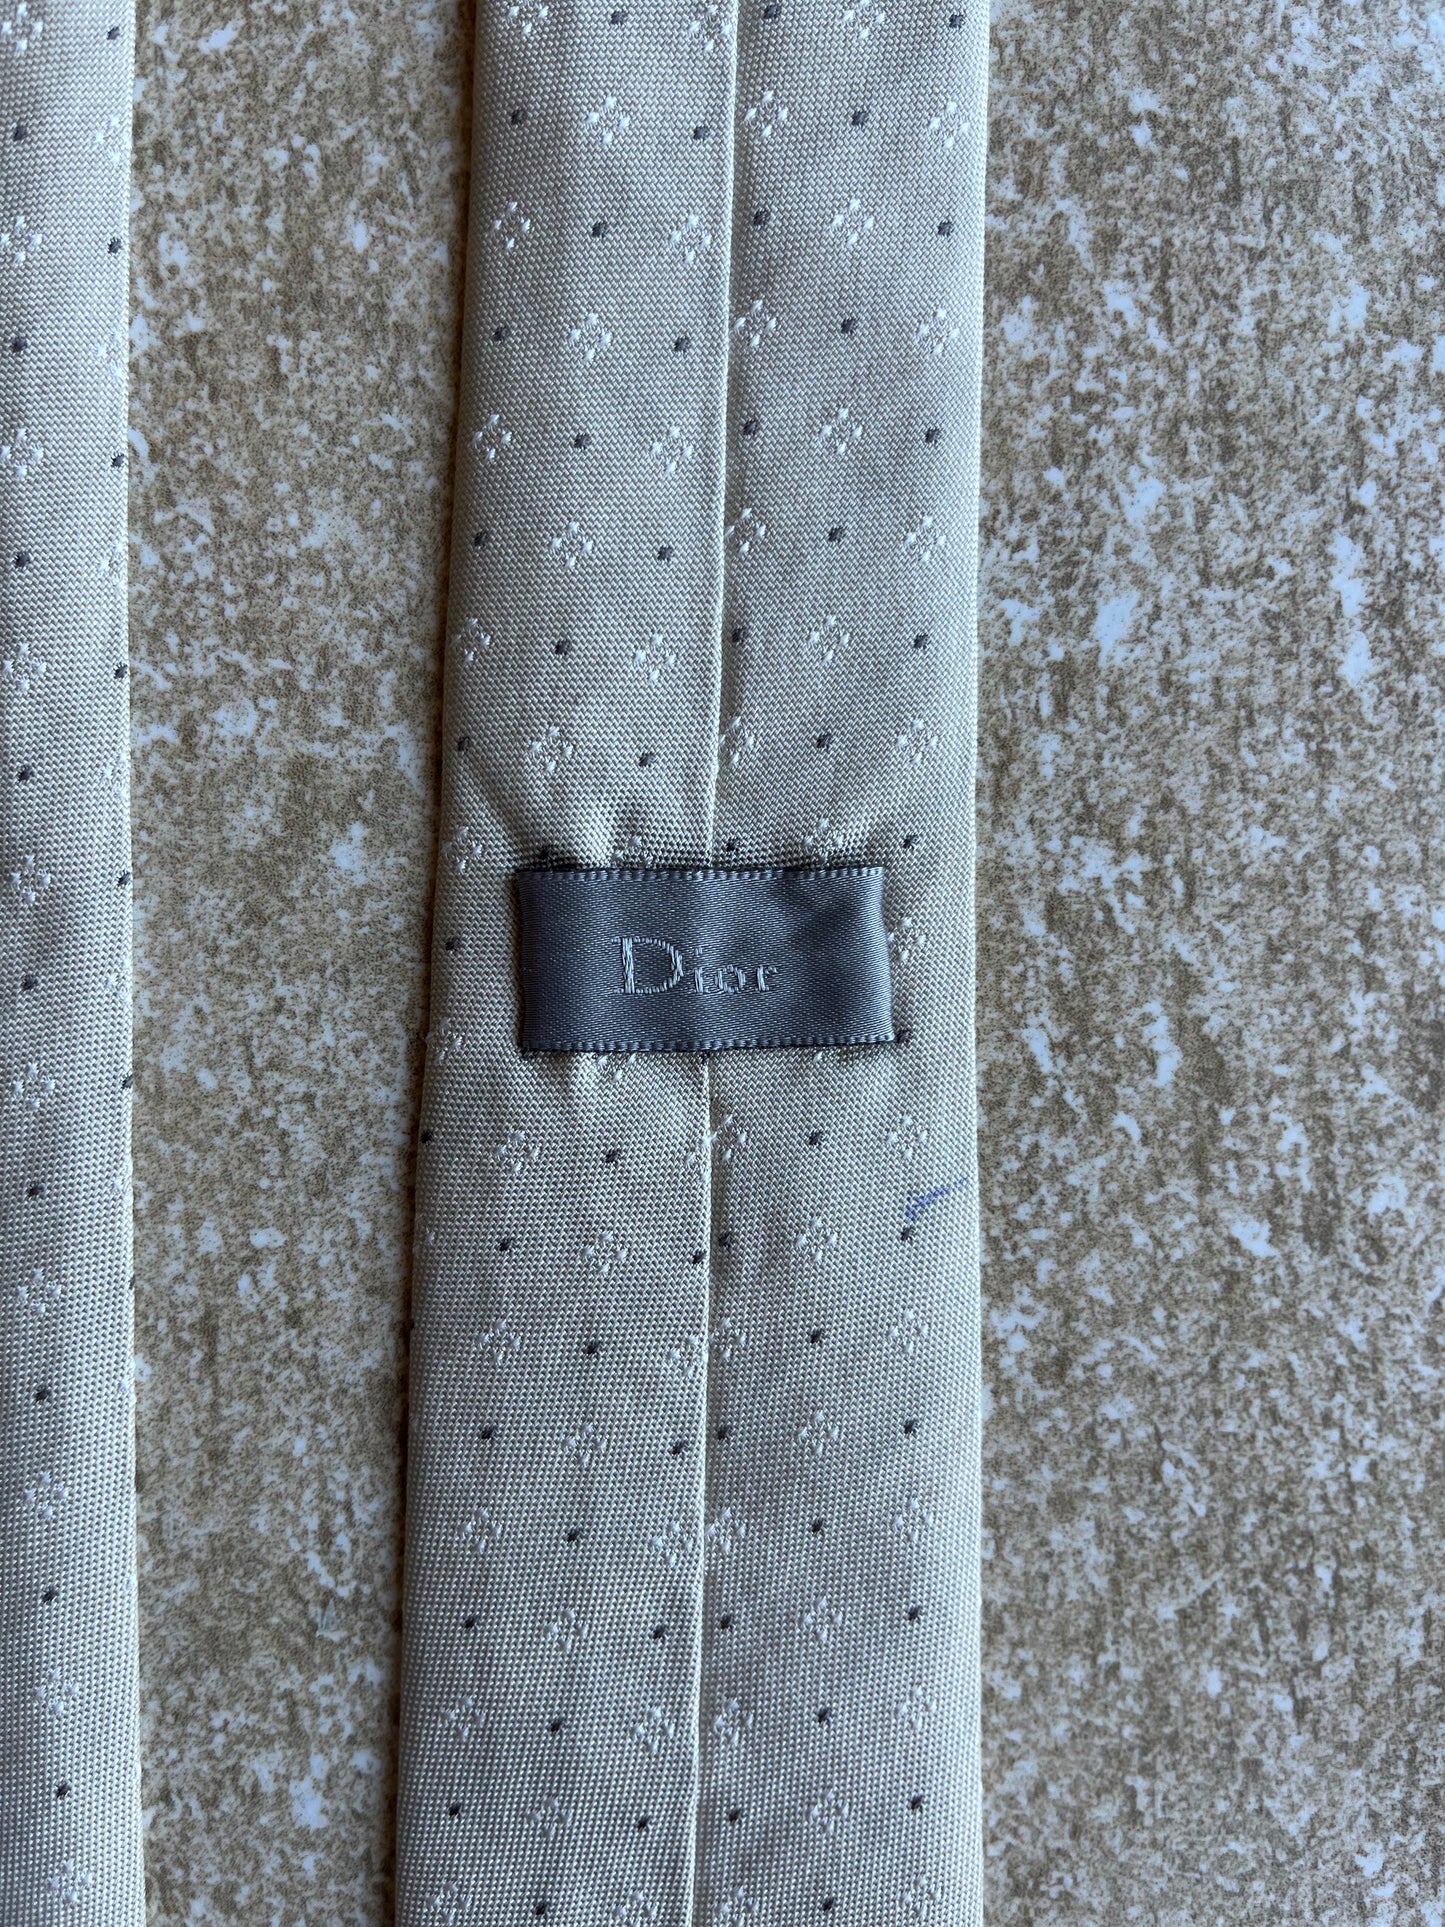 Cravatta Christian Dior panna